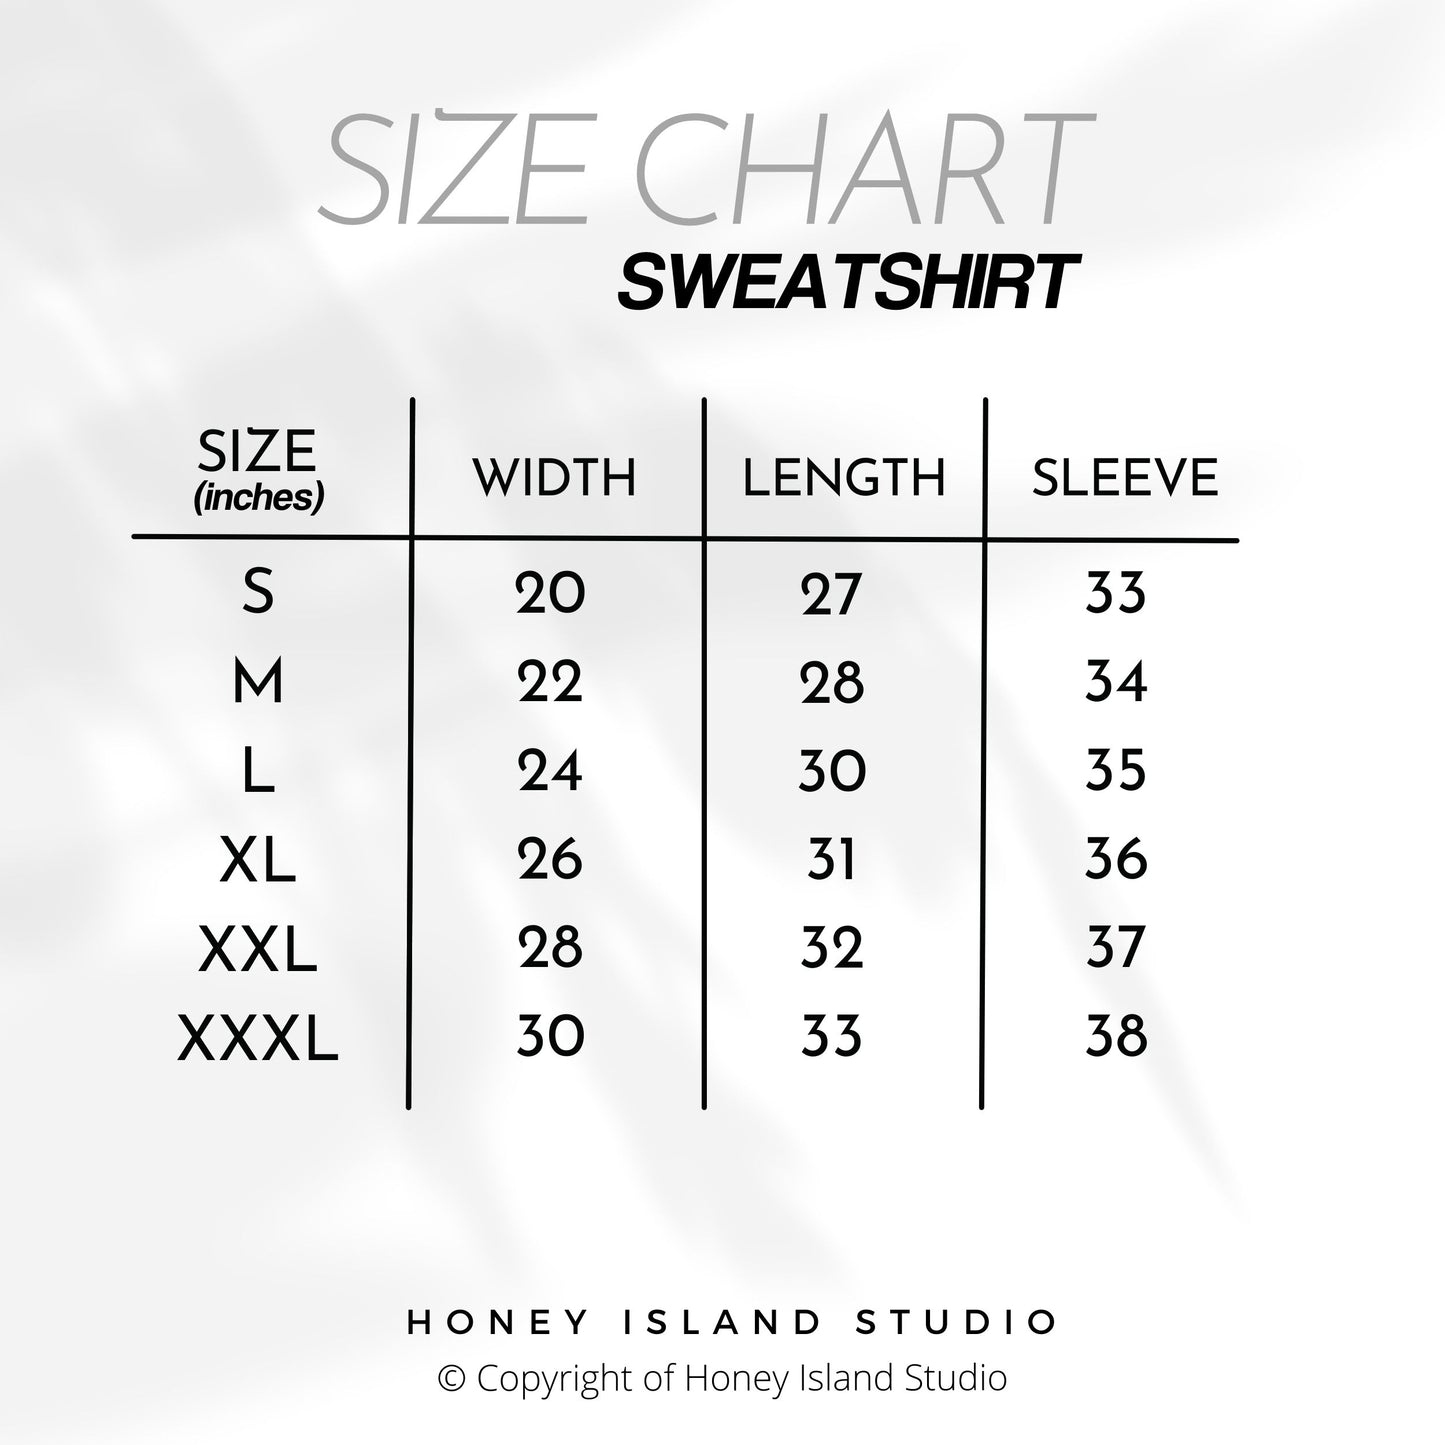 Creative Department - Make Some Real Cool Shit Sweatshirt